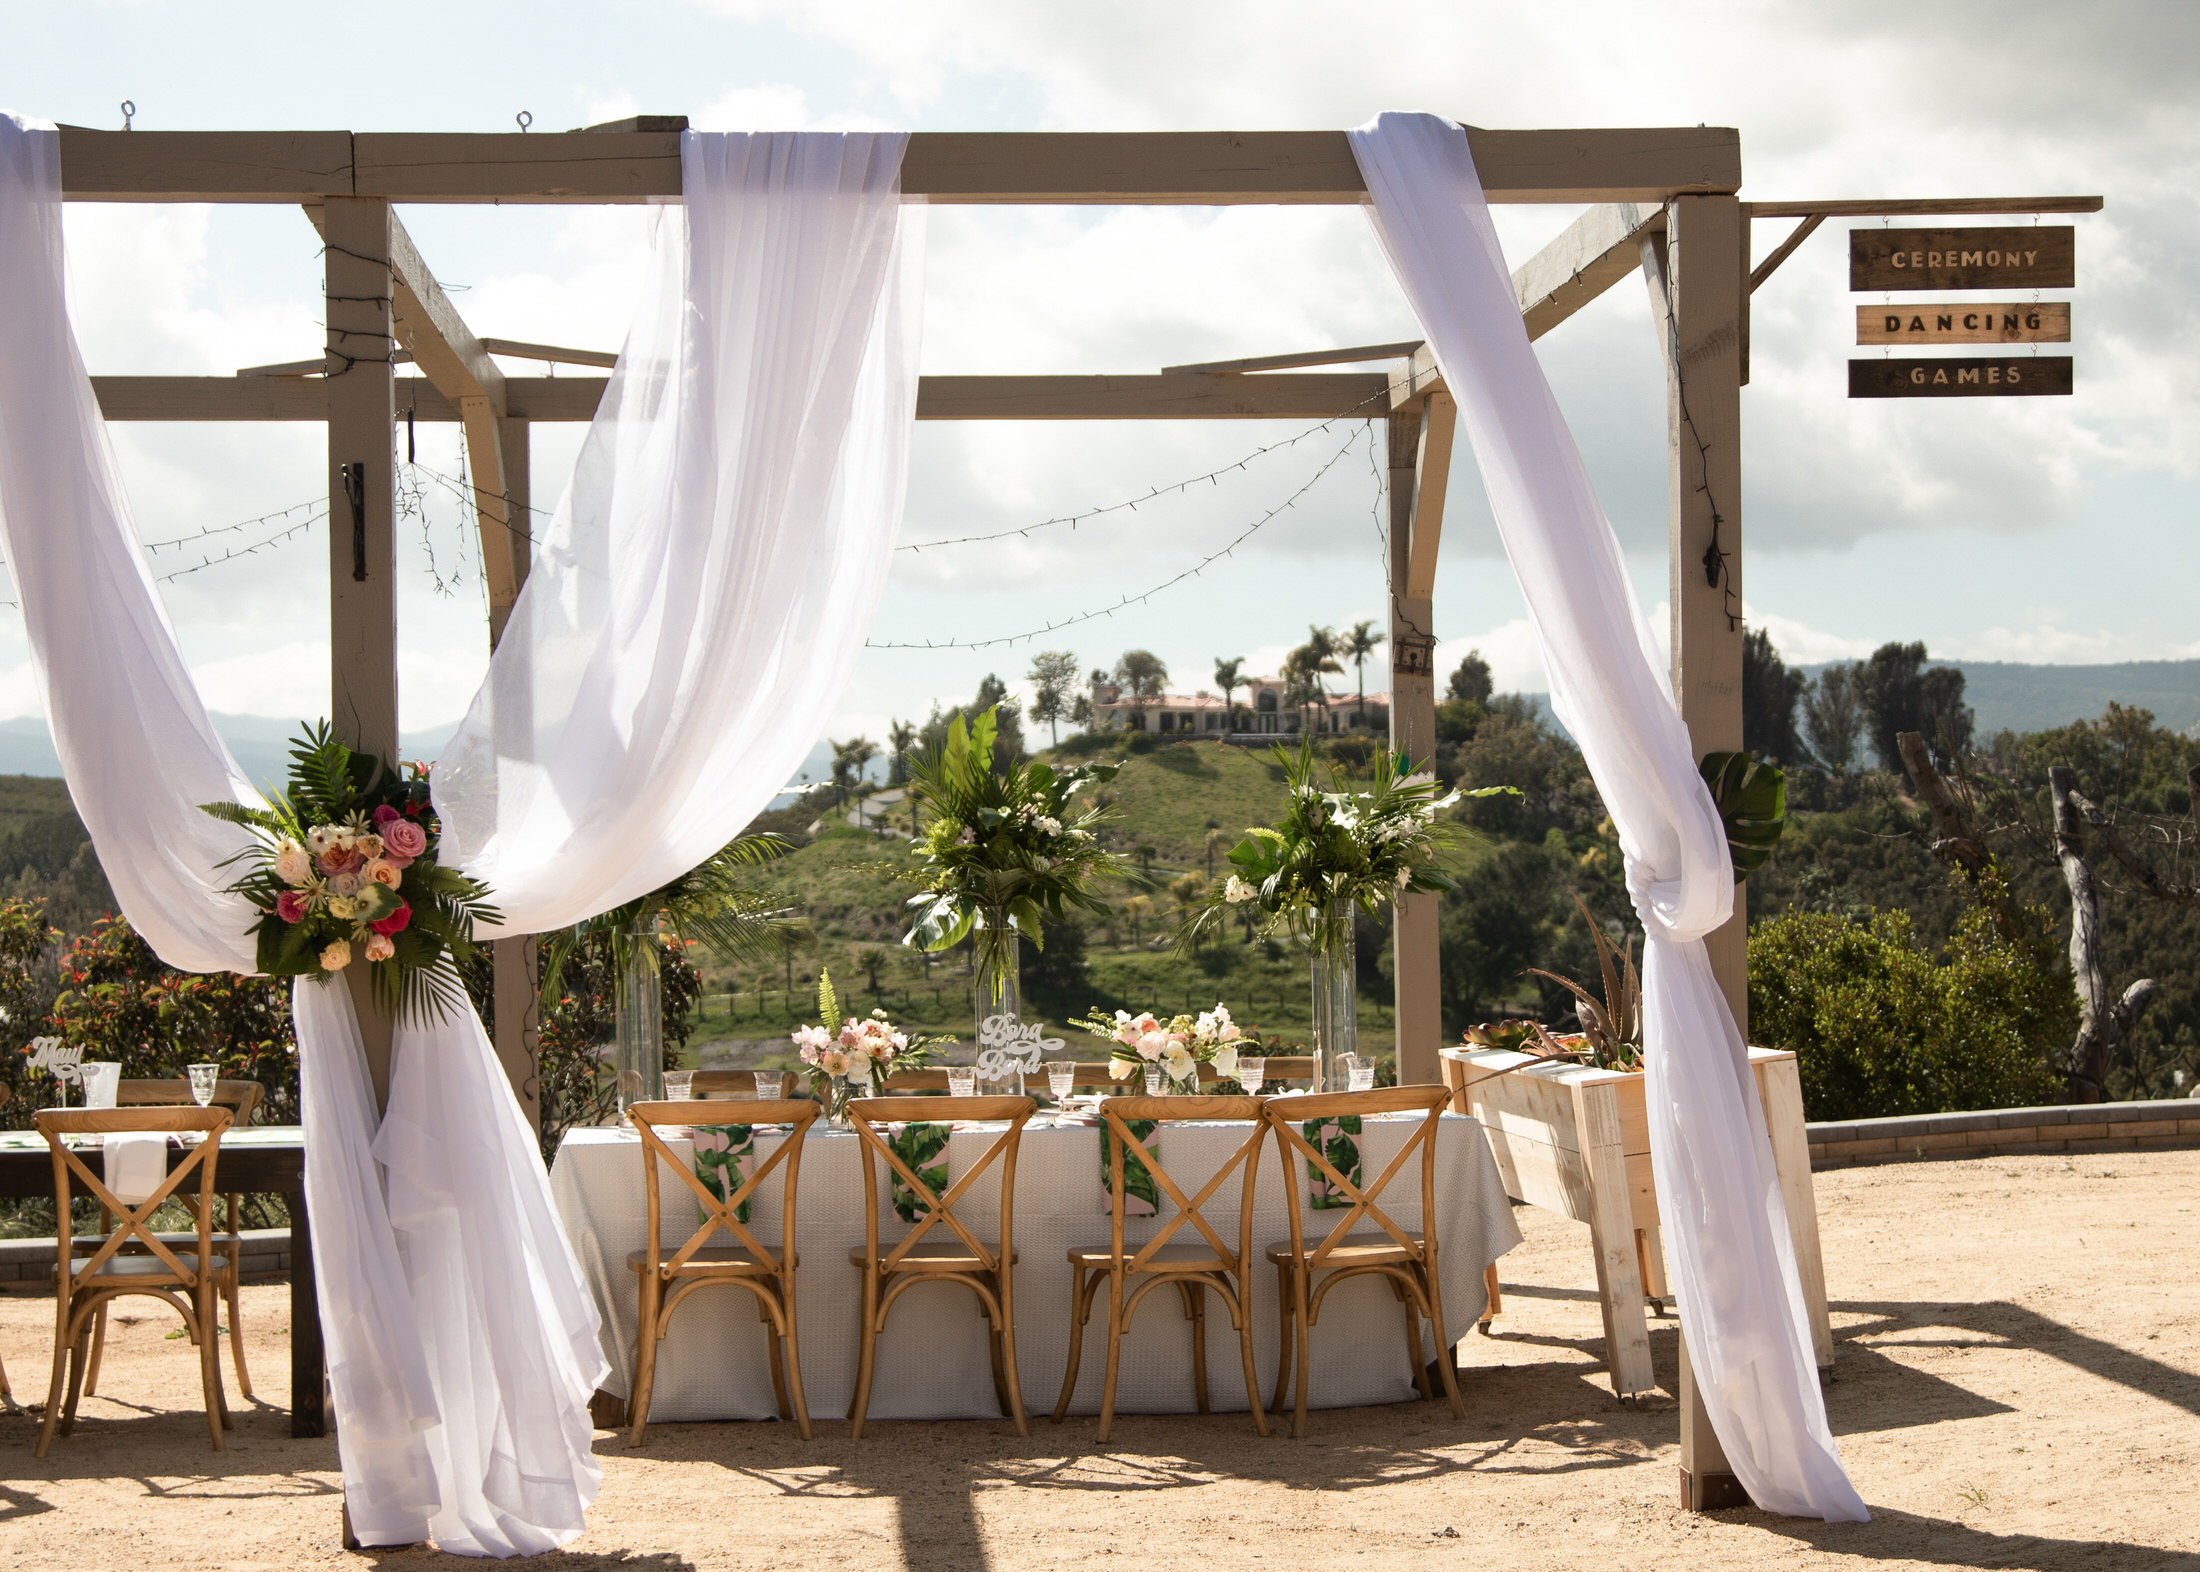 Tropical wedding table setting inspiration.